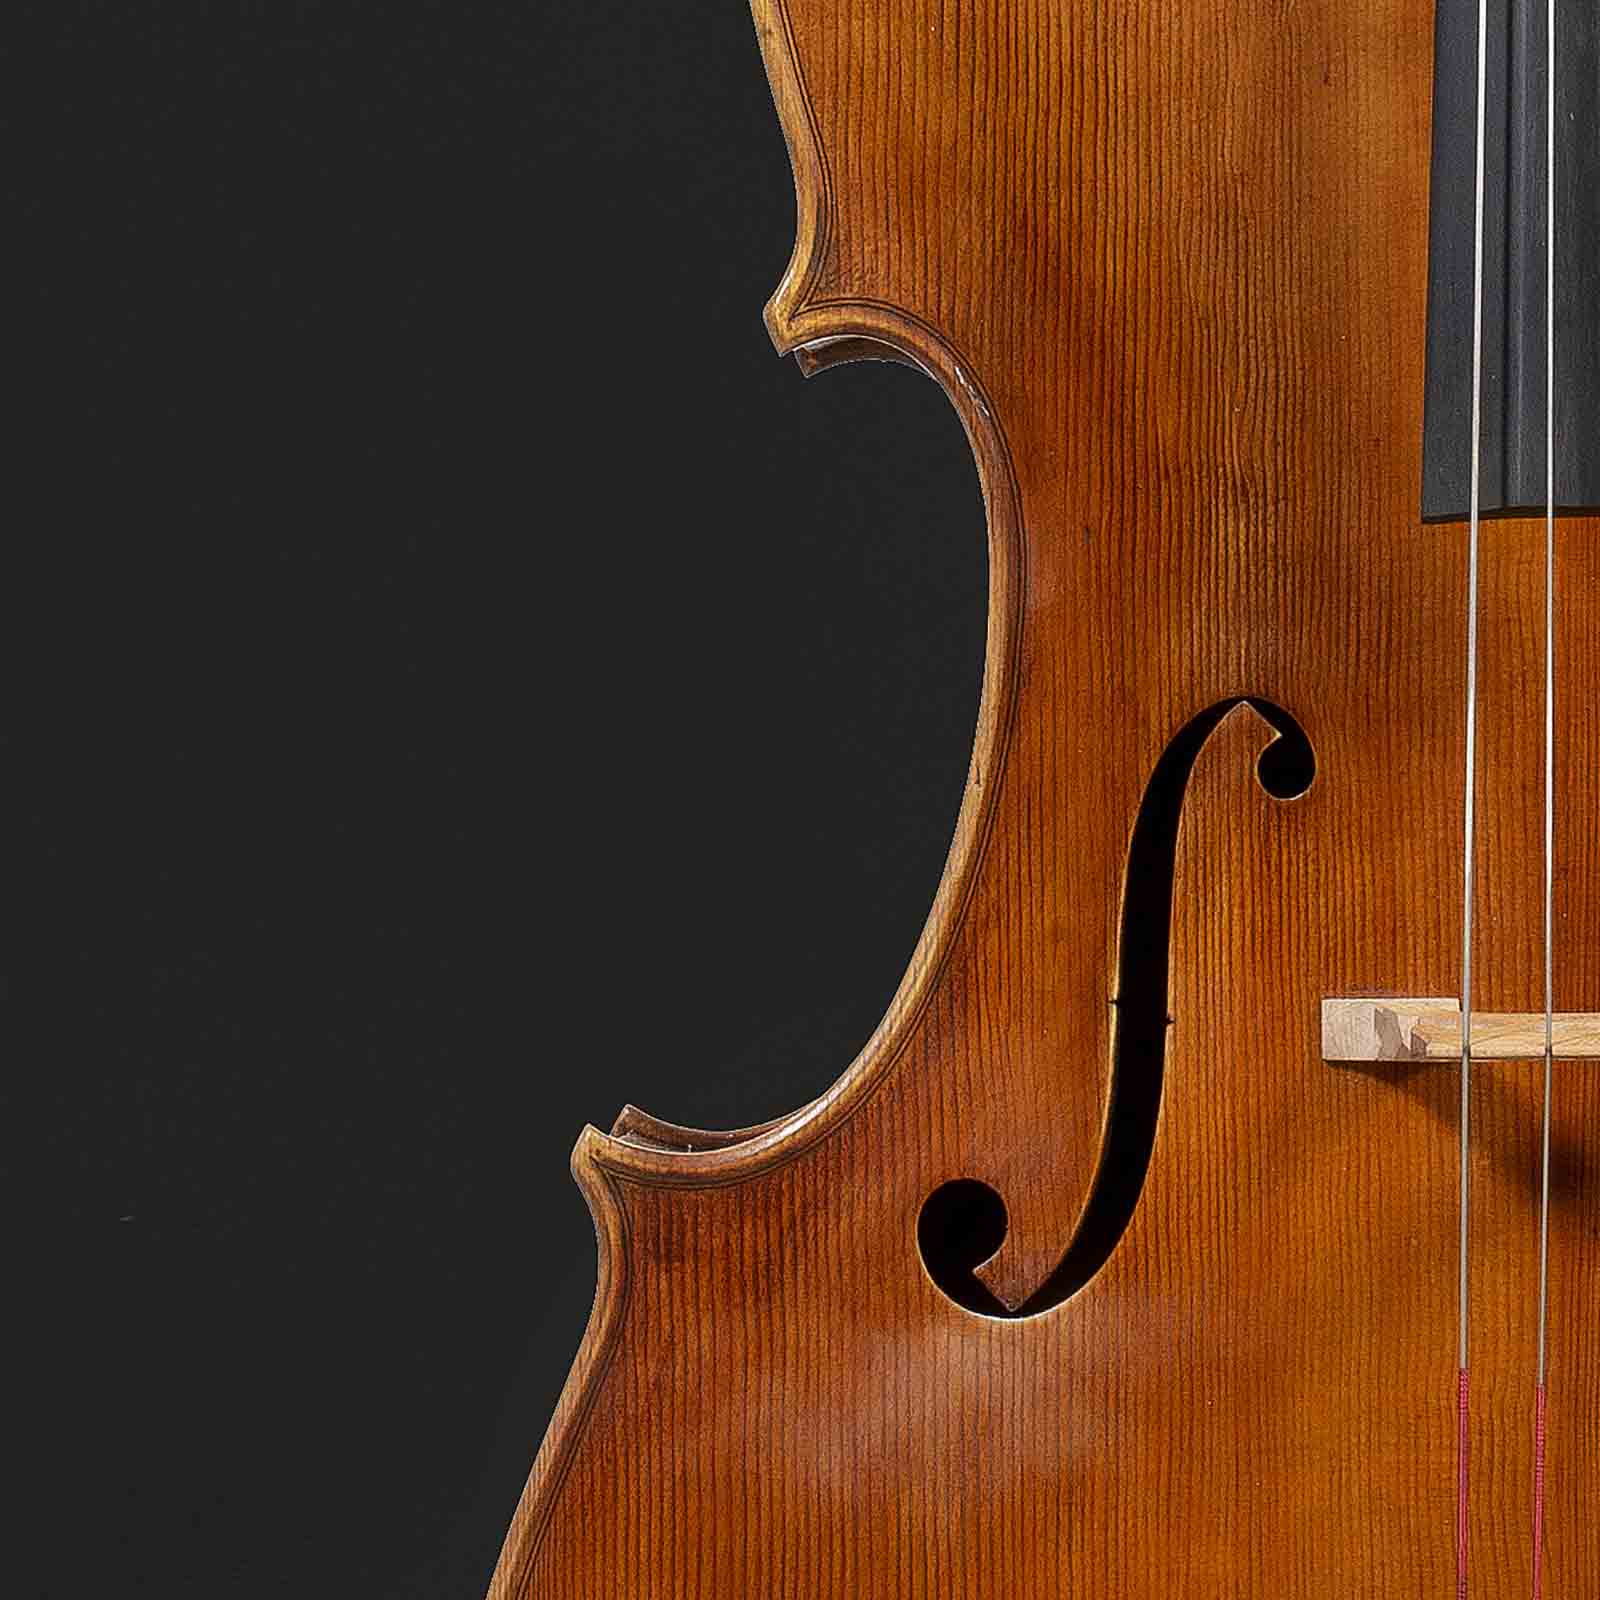 Antonio Stradivari Cremona 1700 “Cristiani“ “Aeos“ - Image 5